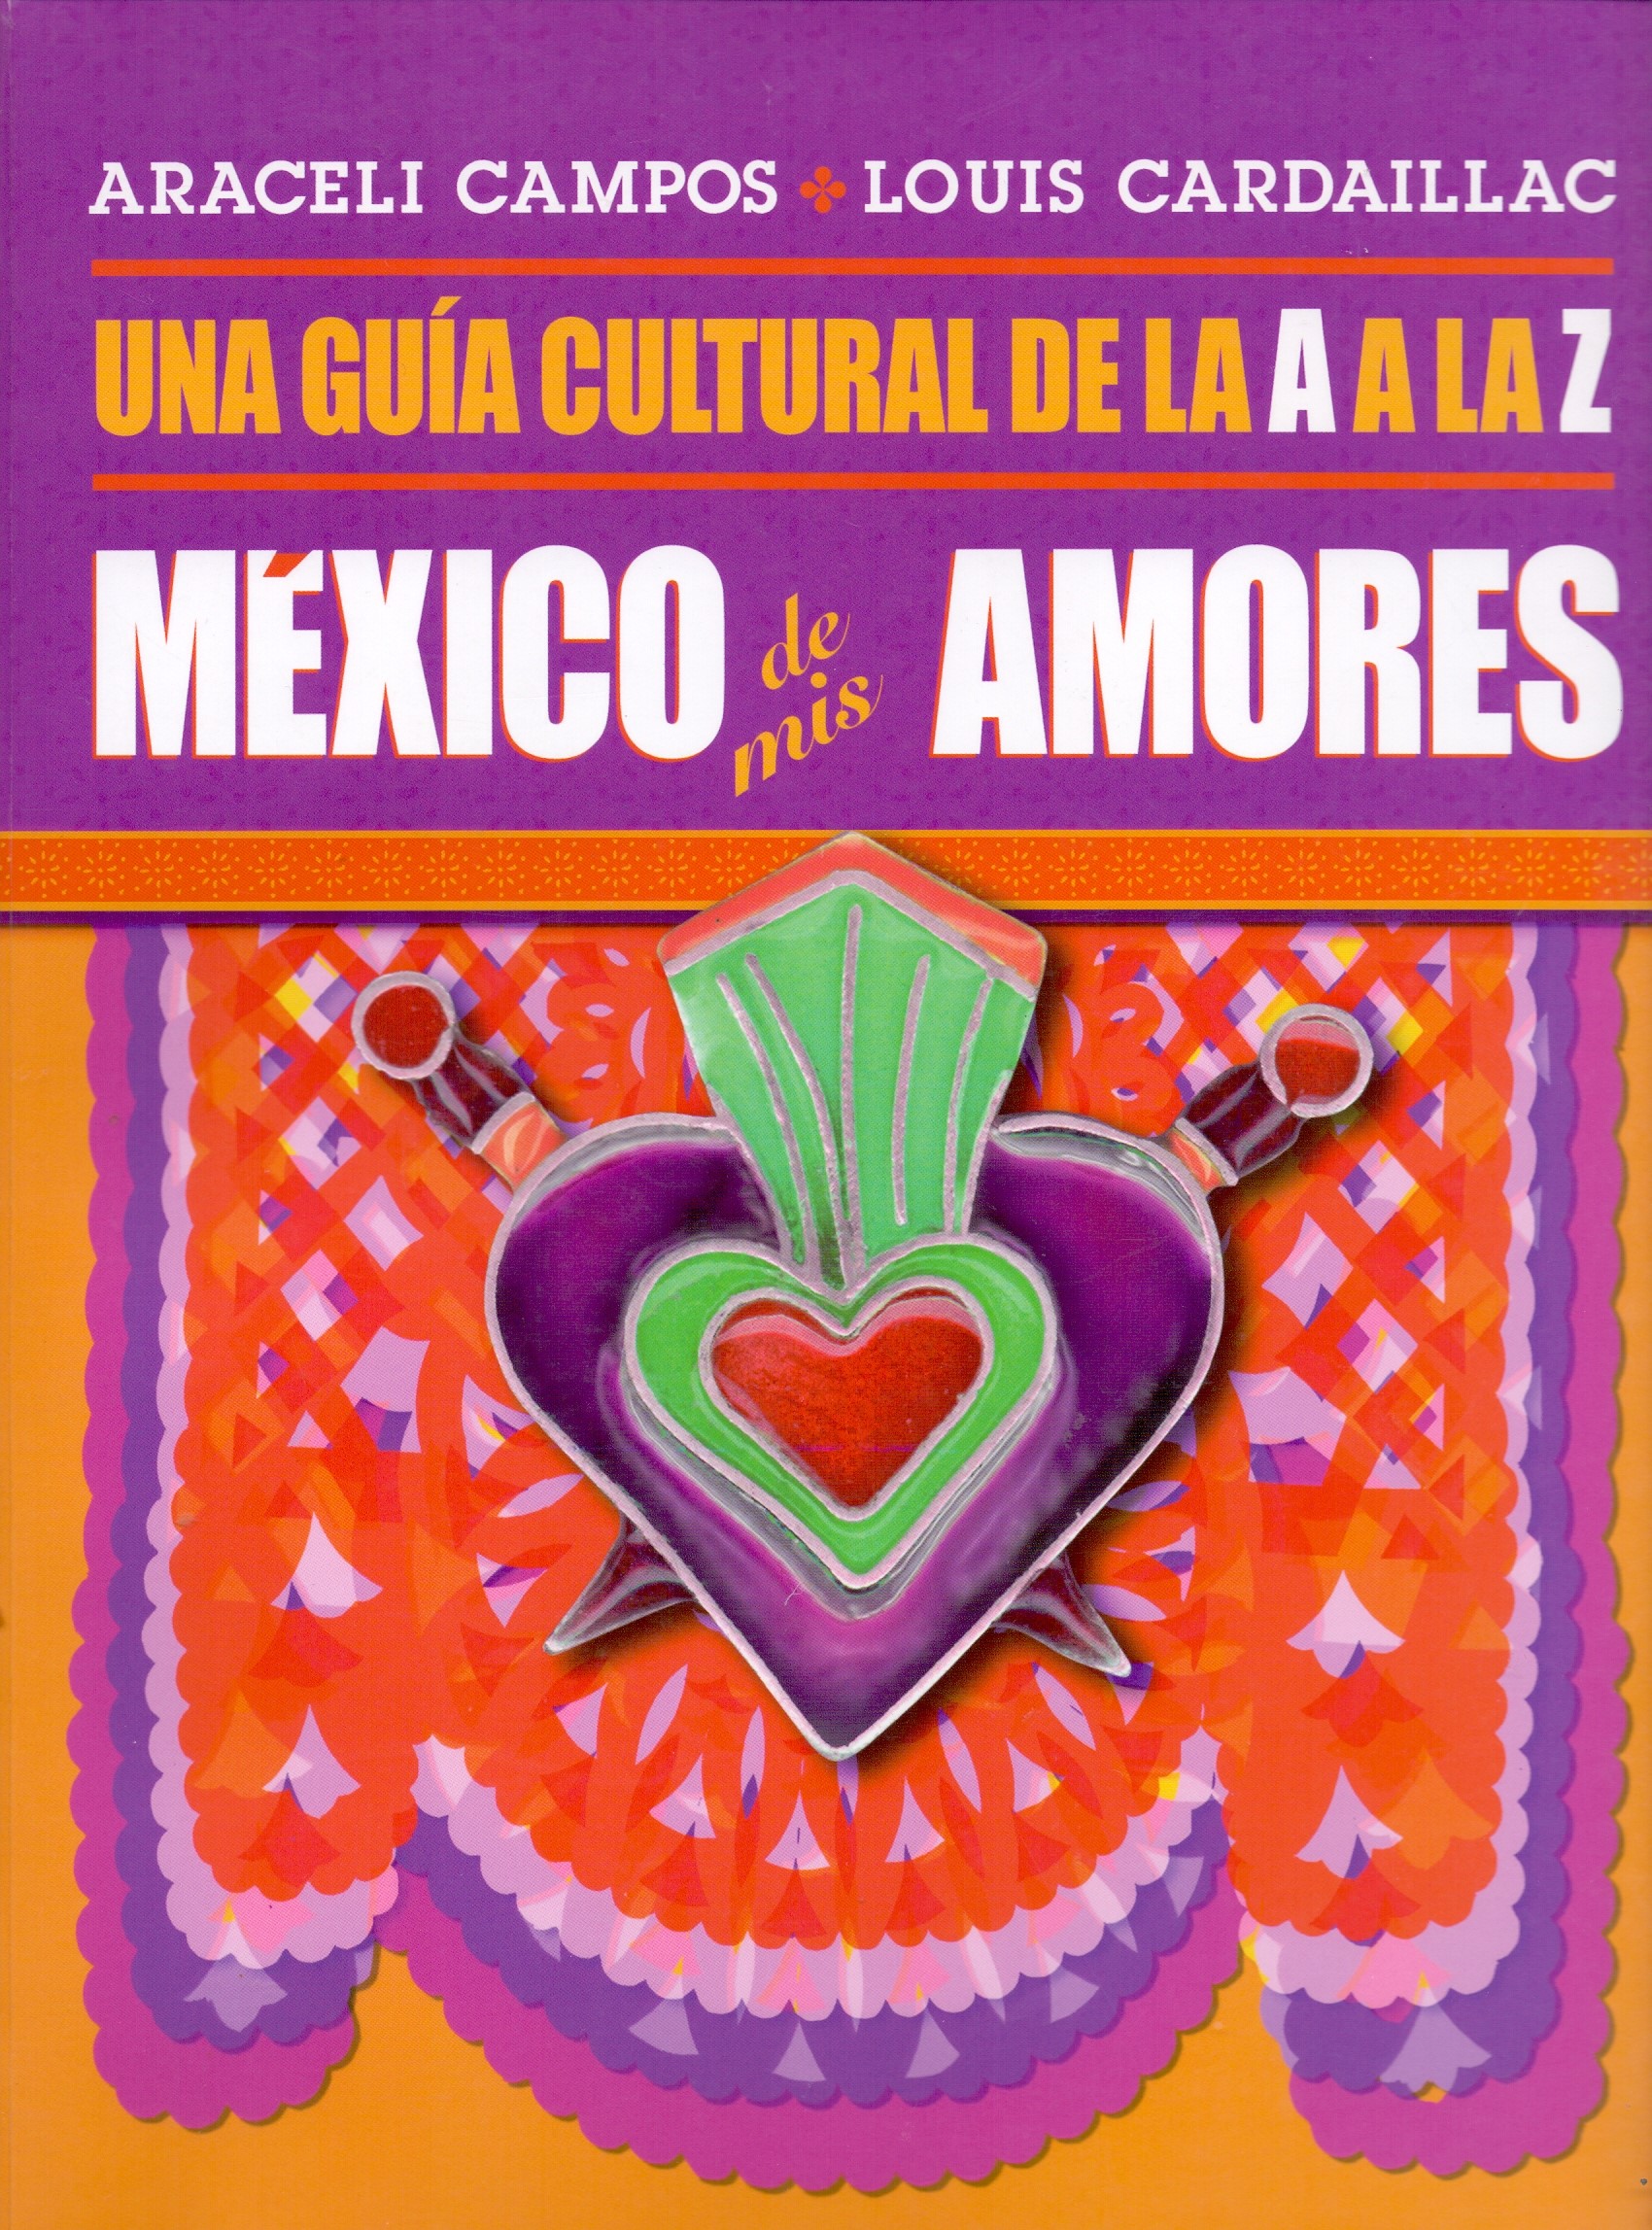 /cms/uploads/image/file/514732/Mexico_de_mis_amores.jpg